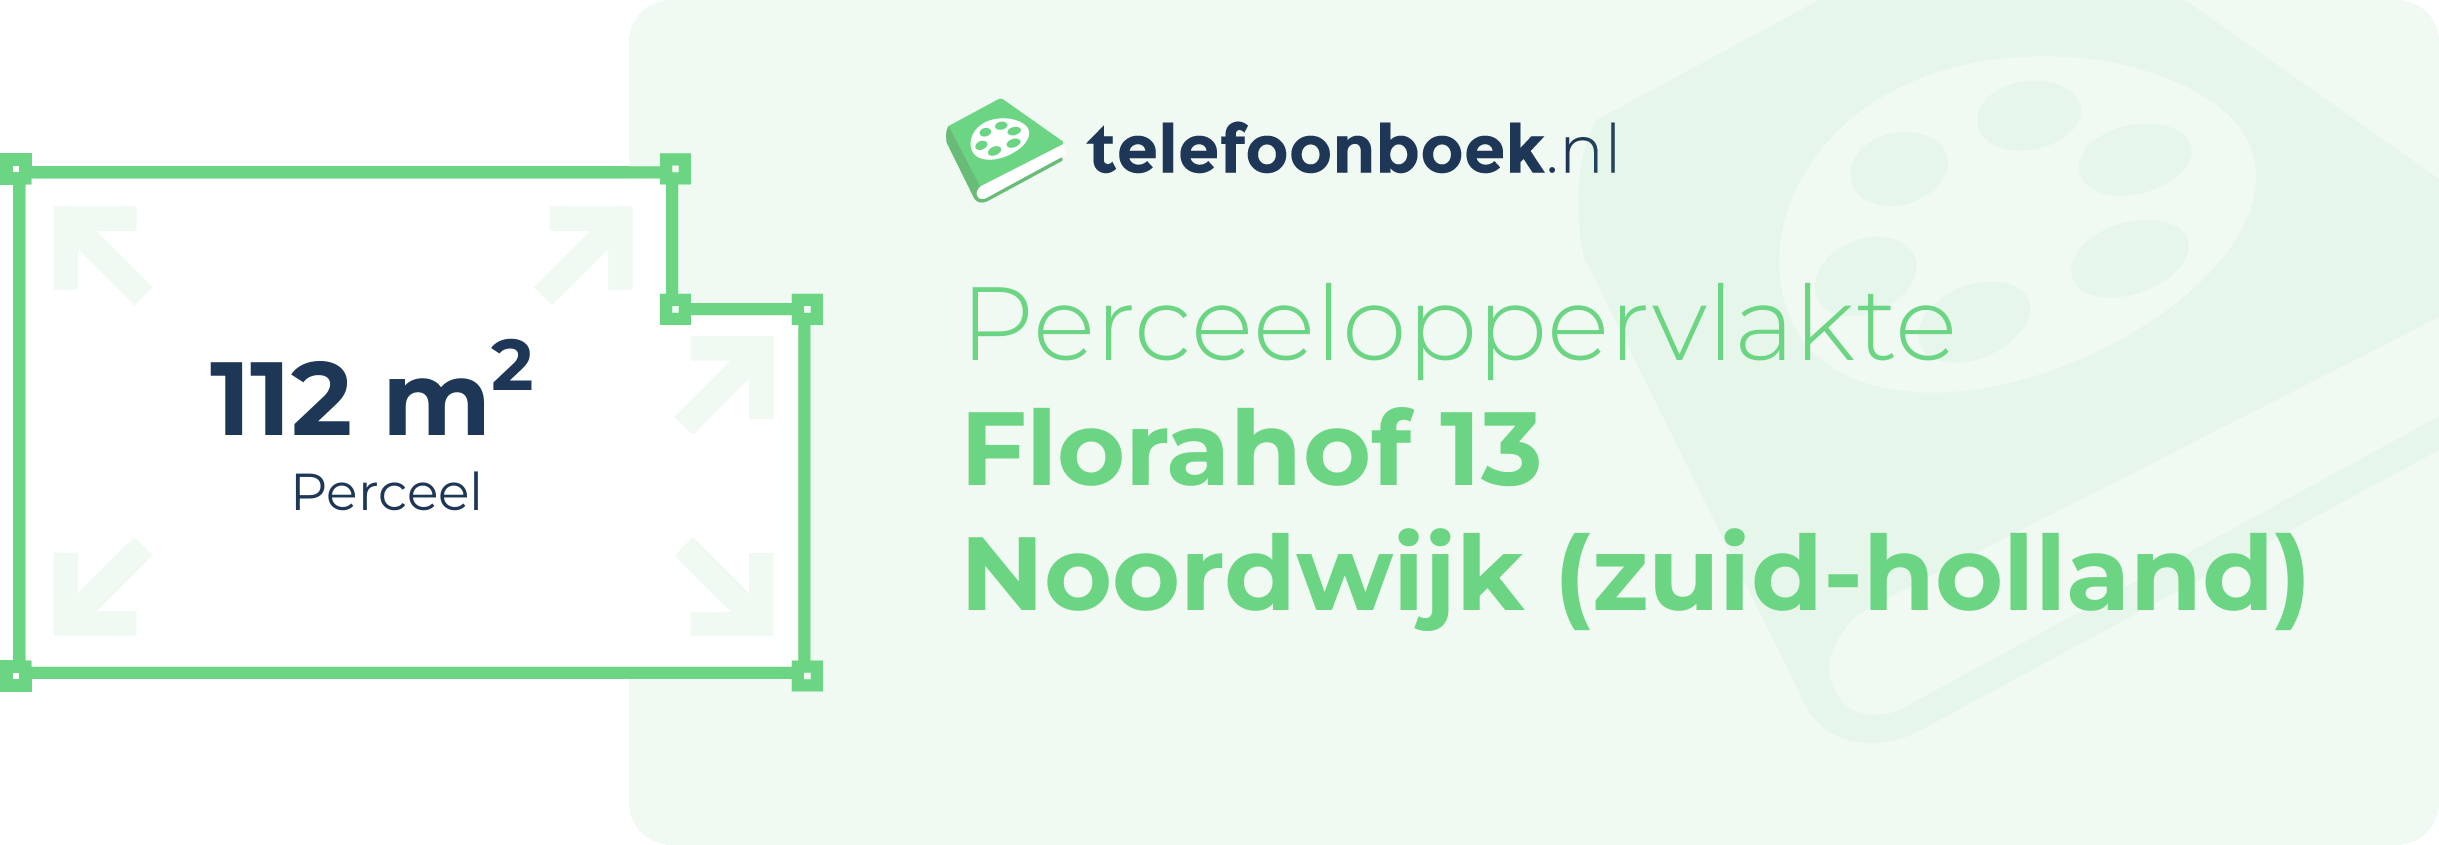 Perceeloppervlakte Florahof 13 Noordwijk (Zuid-Holland)